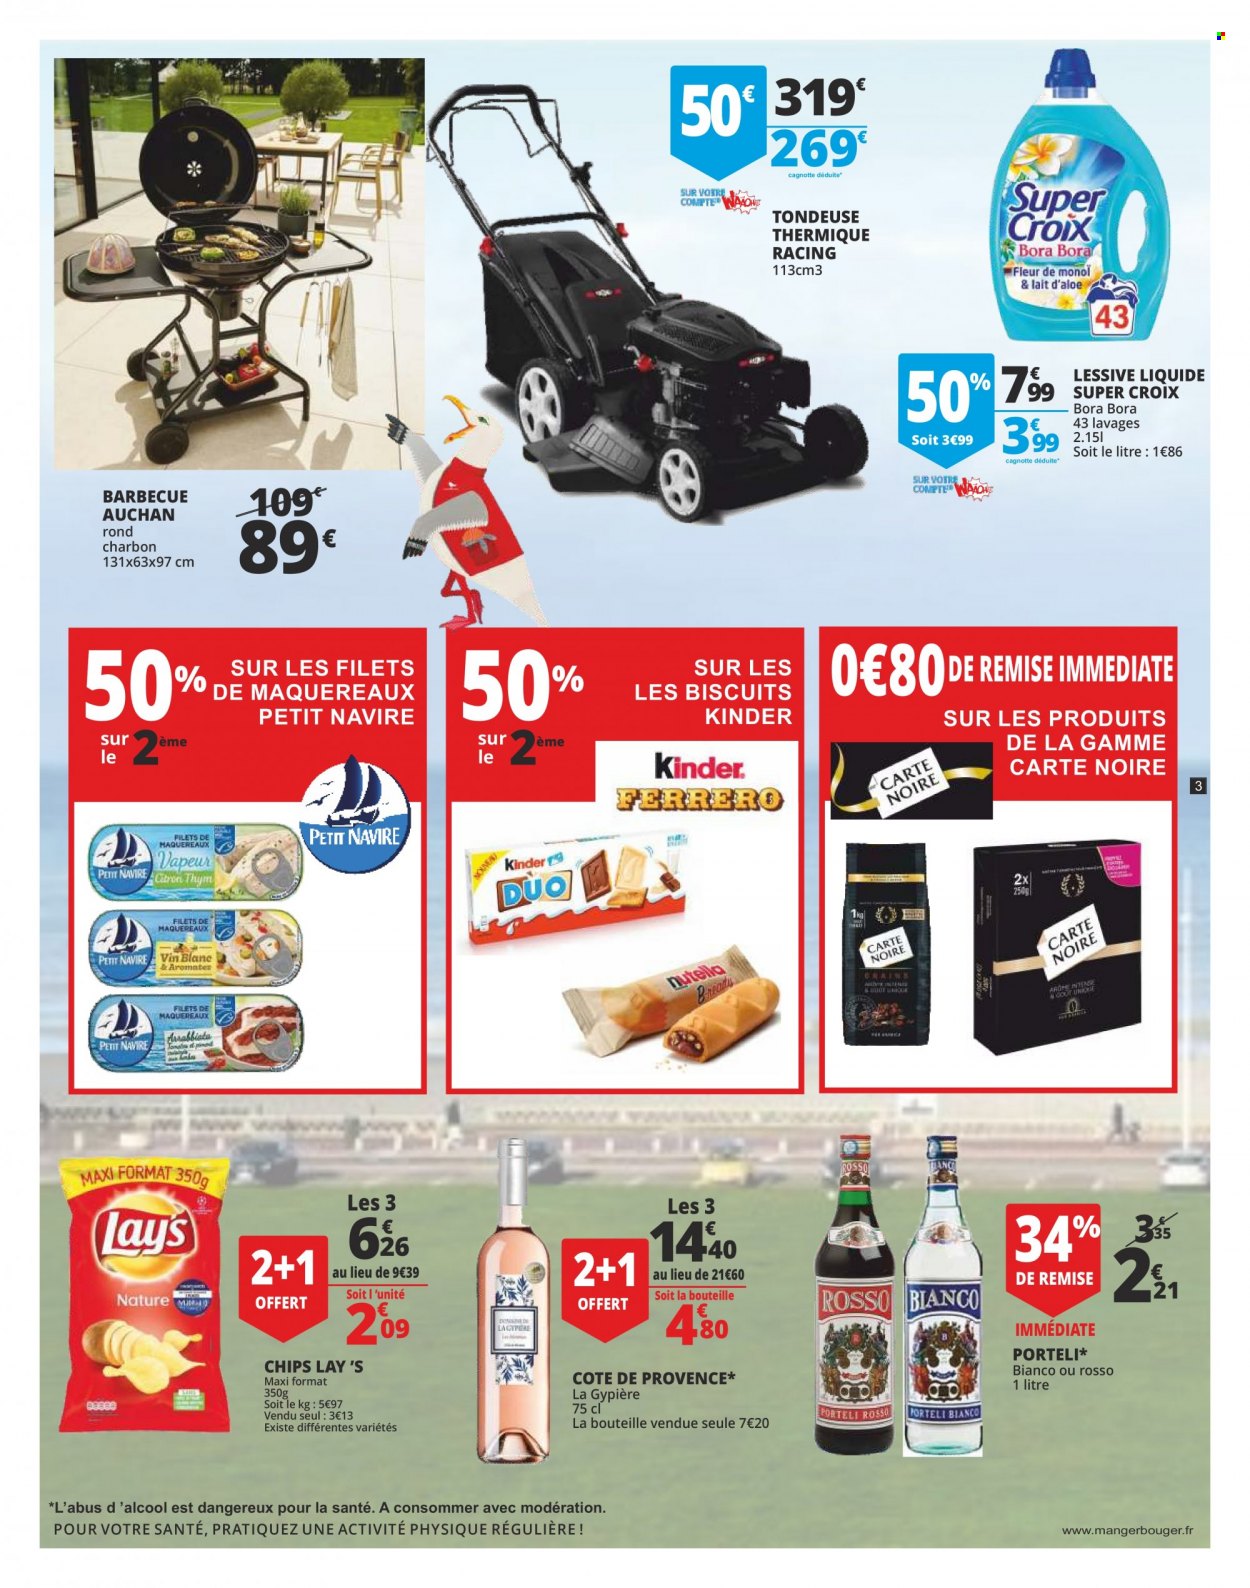 Catalogue Auchan - 19.05.2022 - 22.05.2022. 